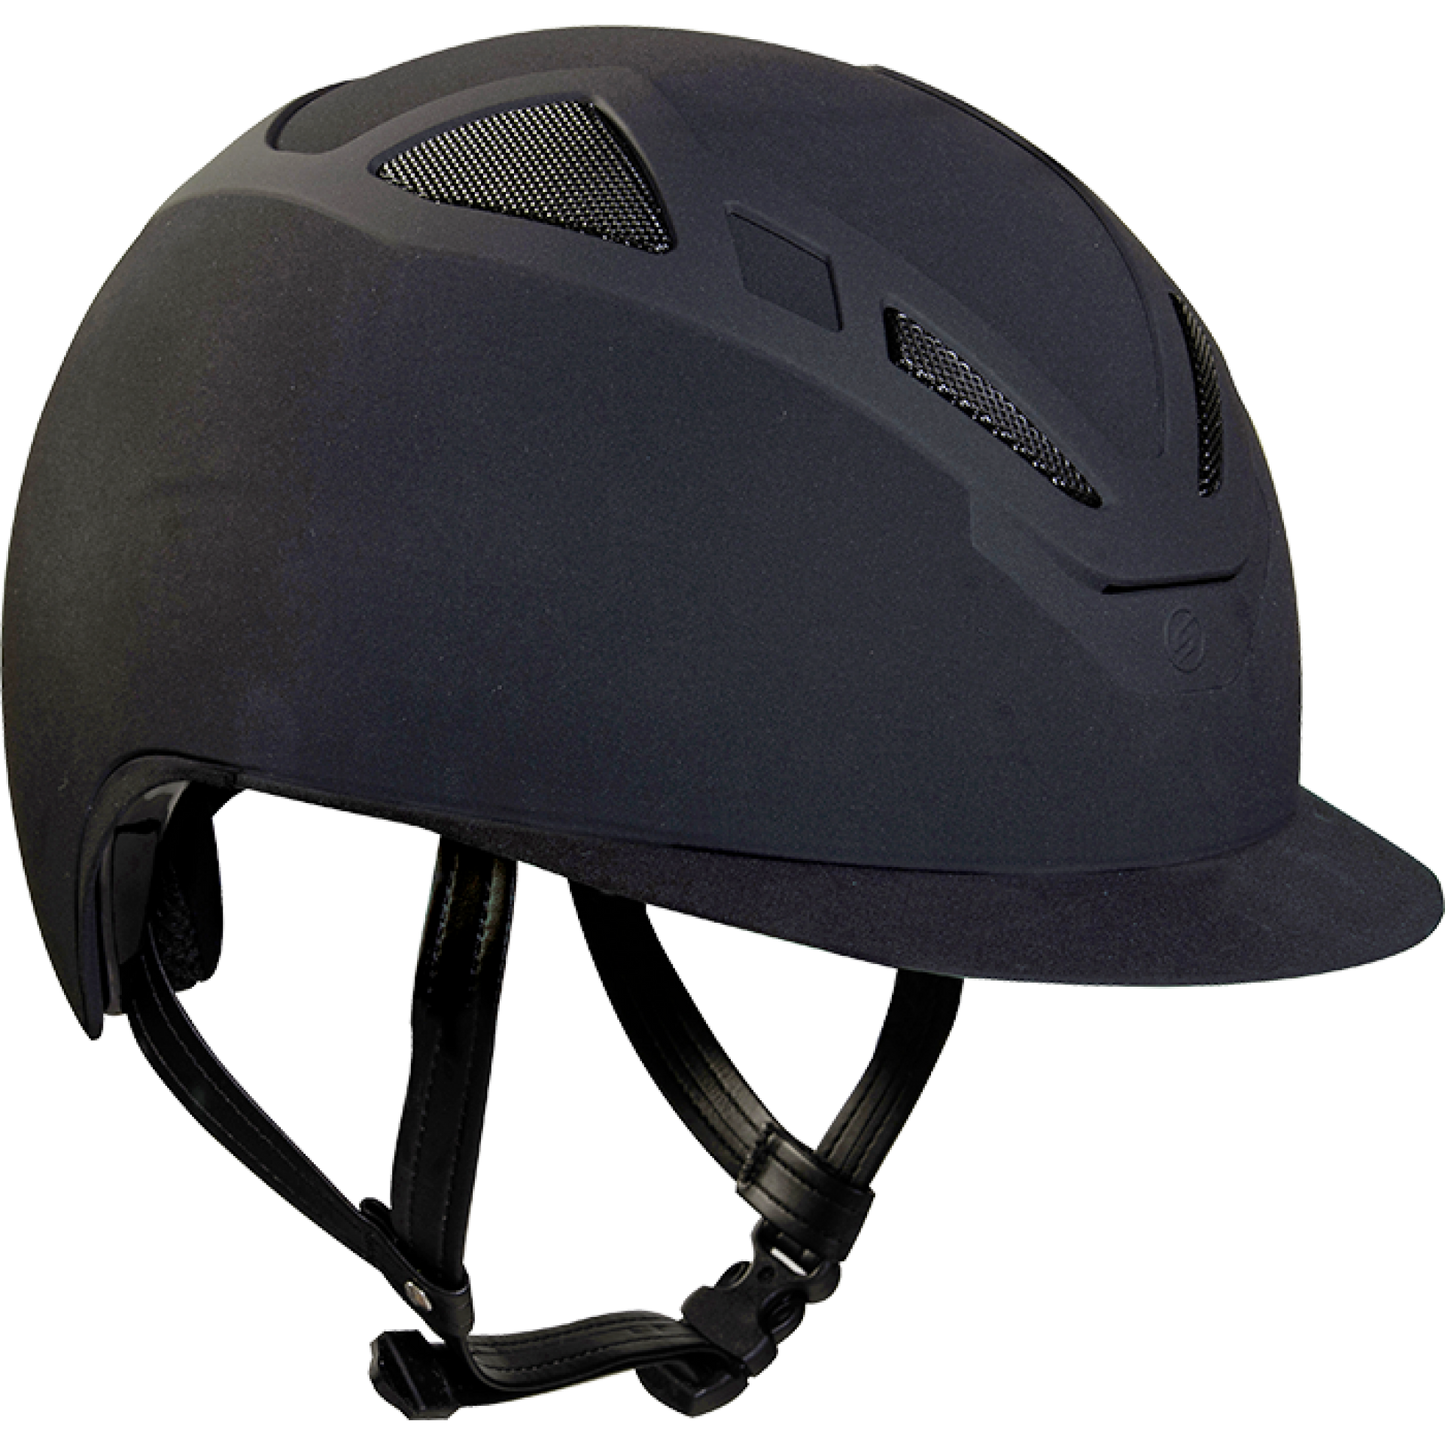 Suomy Apex Black Matt Helmet